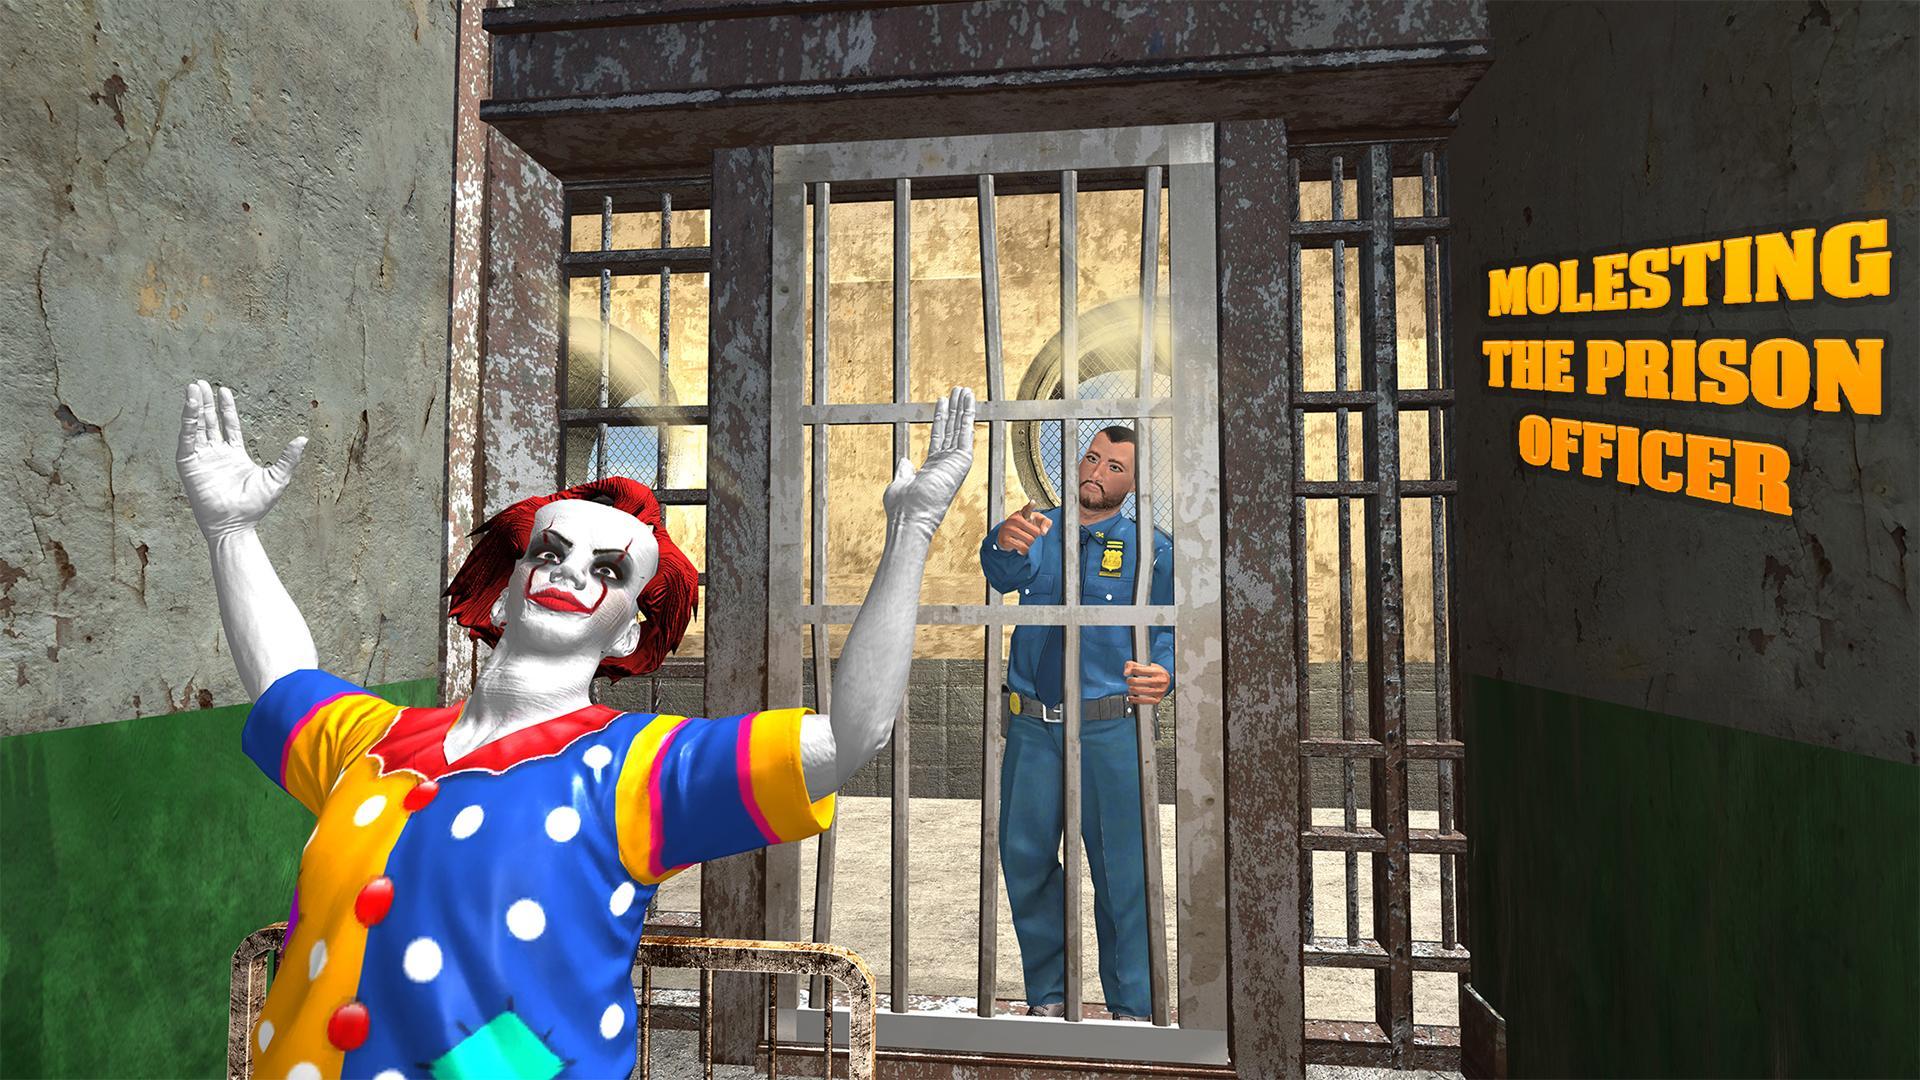 Killer Clown Prison Escape Jailbreak Simulator Pour Android - alcatraz prison guard suit roblox